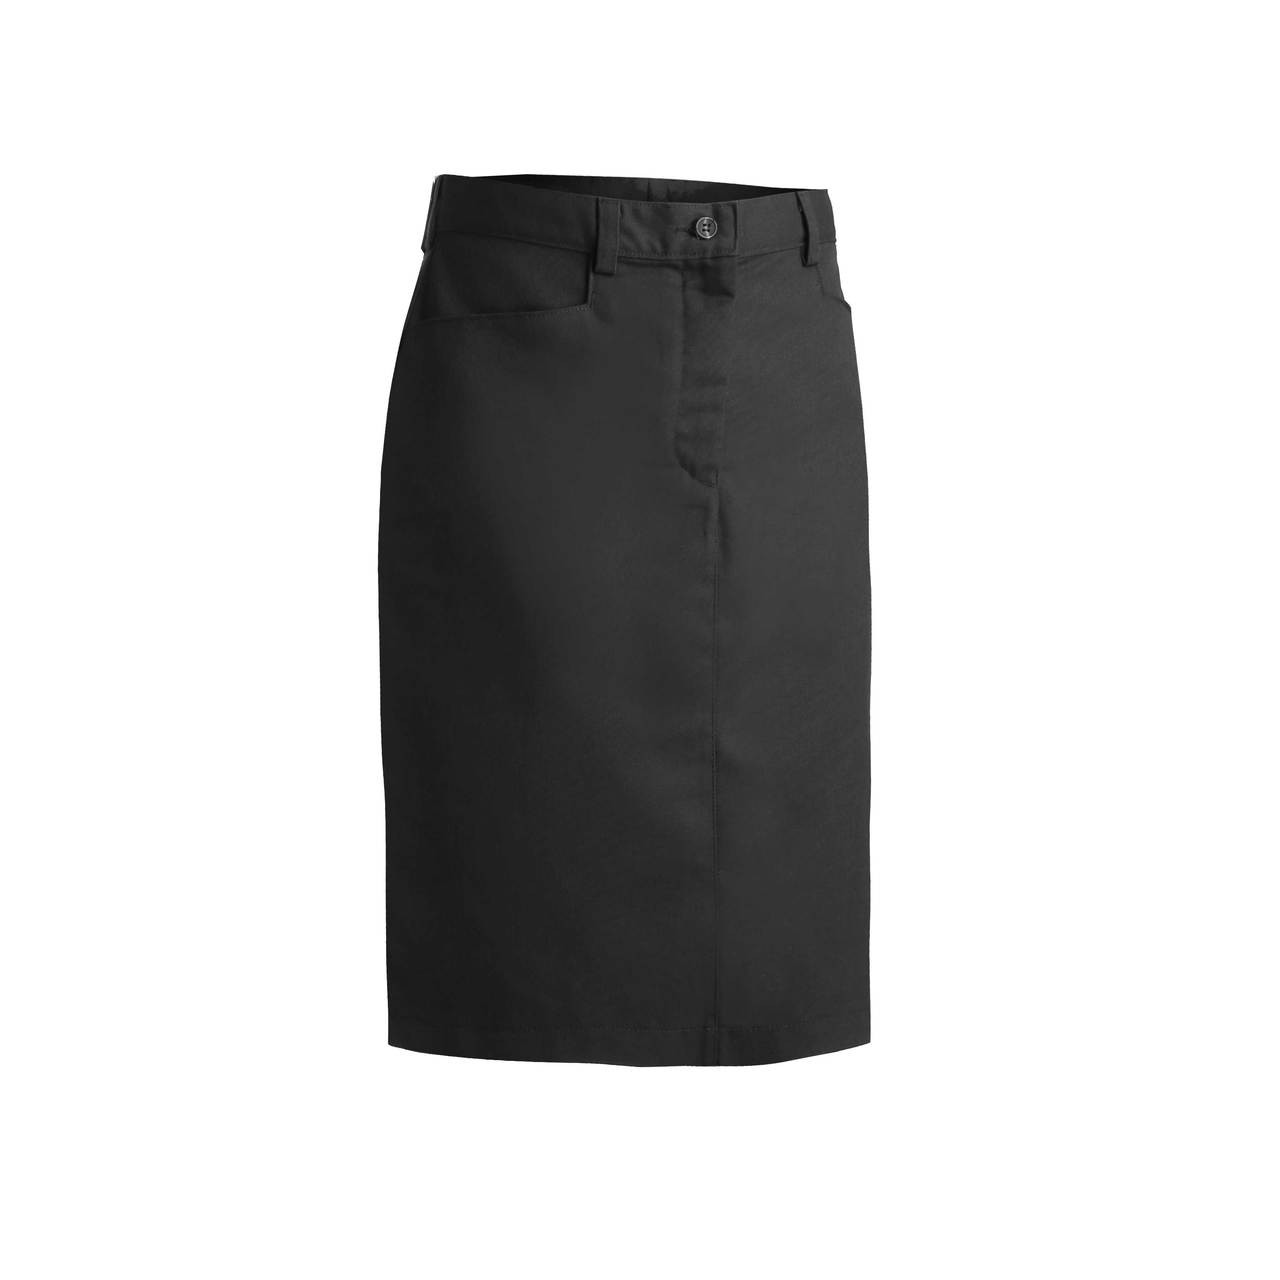 Uniform Skirt in 2 Lengths CLOSEOUT No Returns